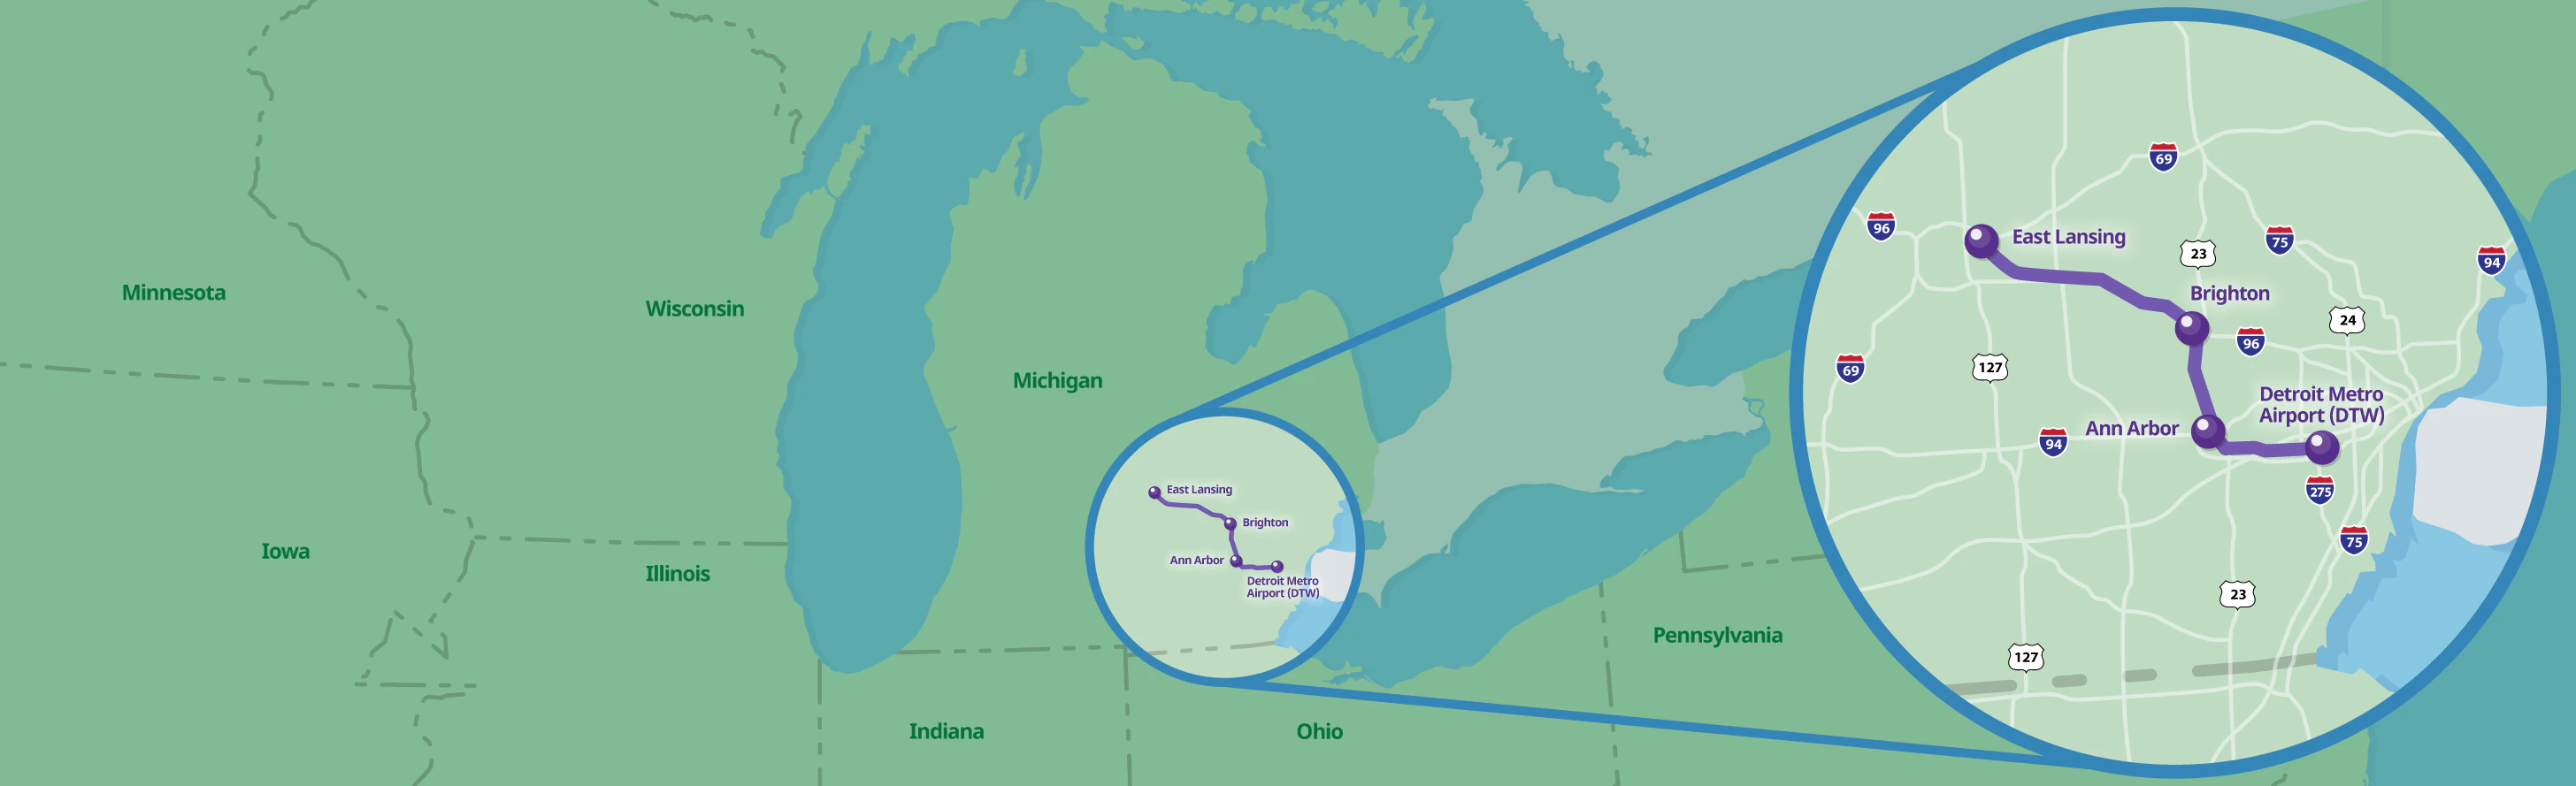 Michigan Flyer Service Area Map